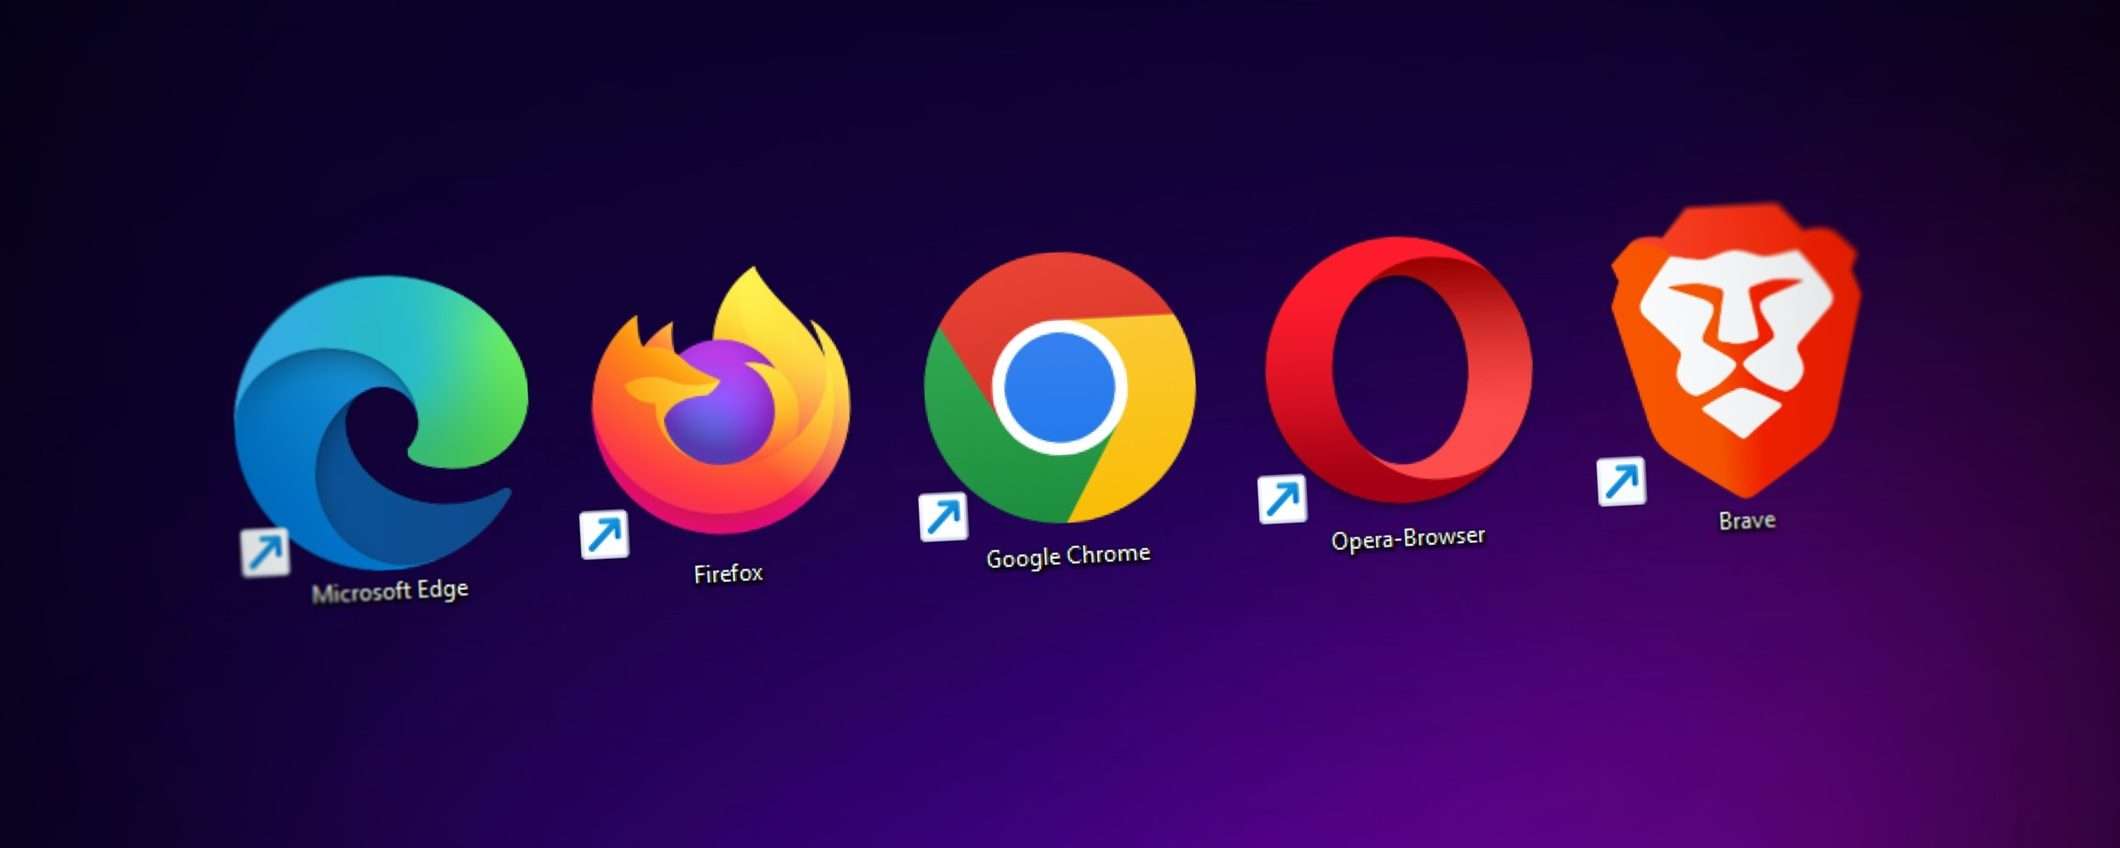 Firefox perde terreno, Chrome leader indiscusso